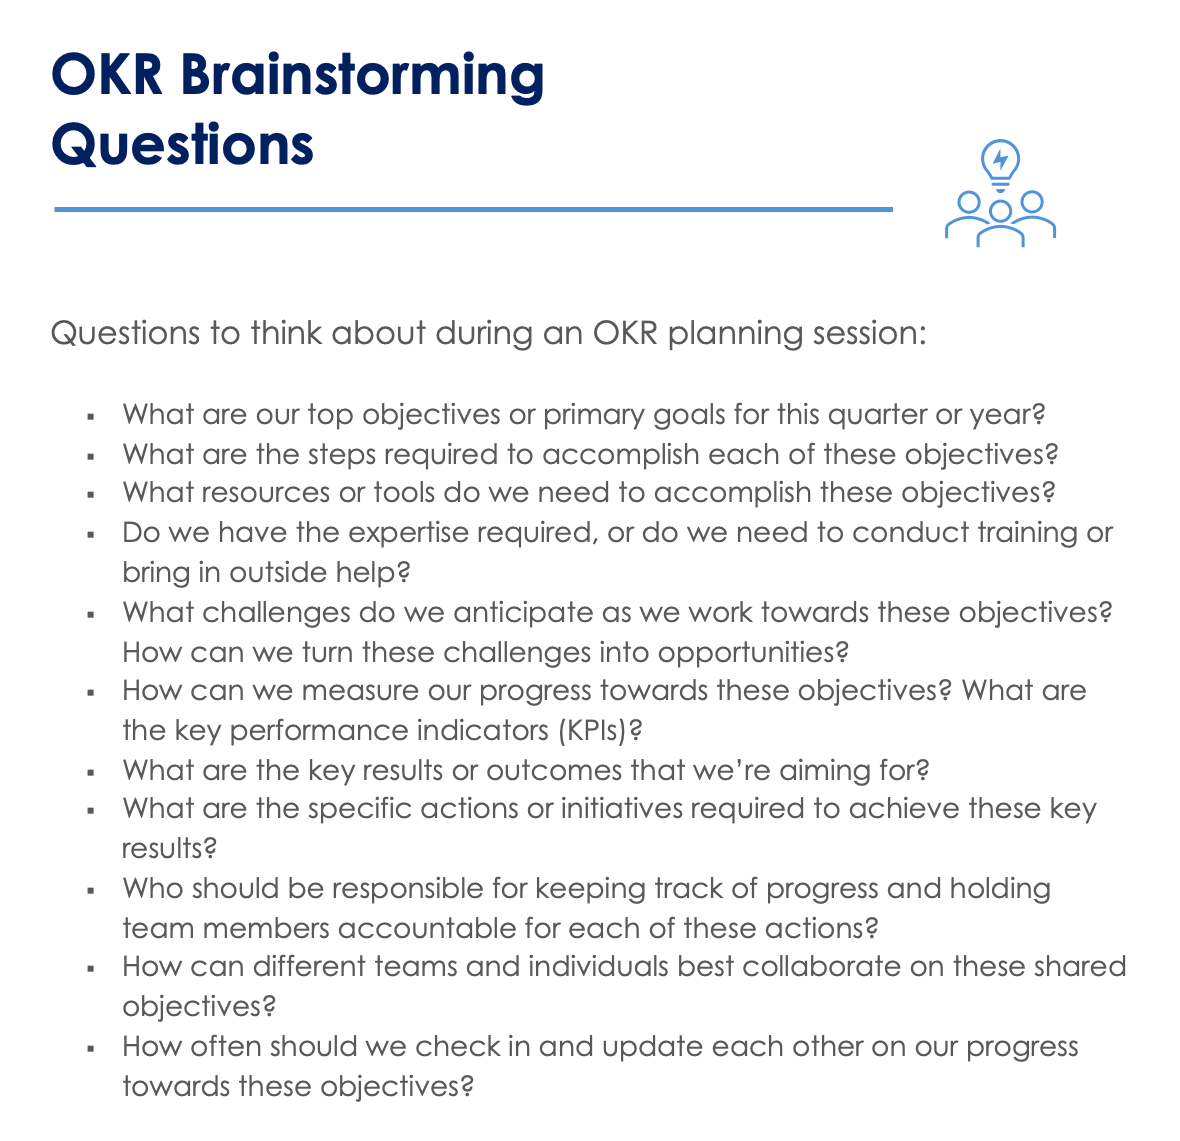 OKR Brainstorming Questions